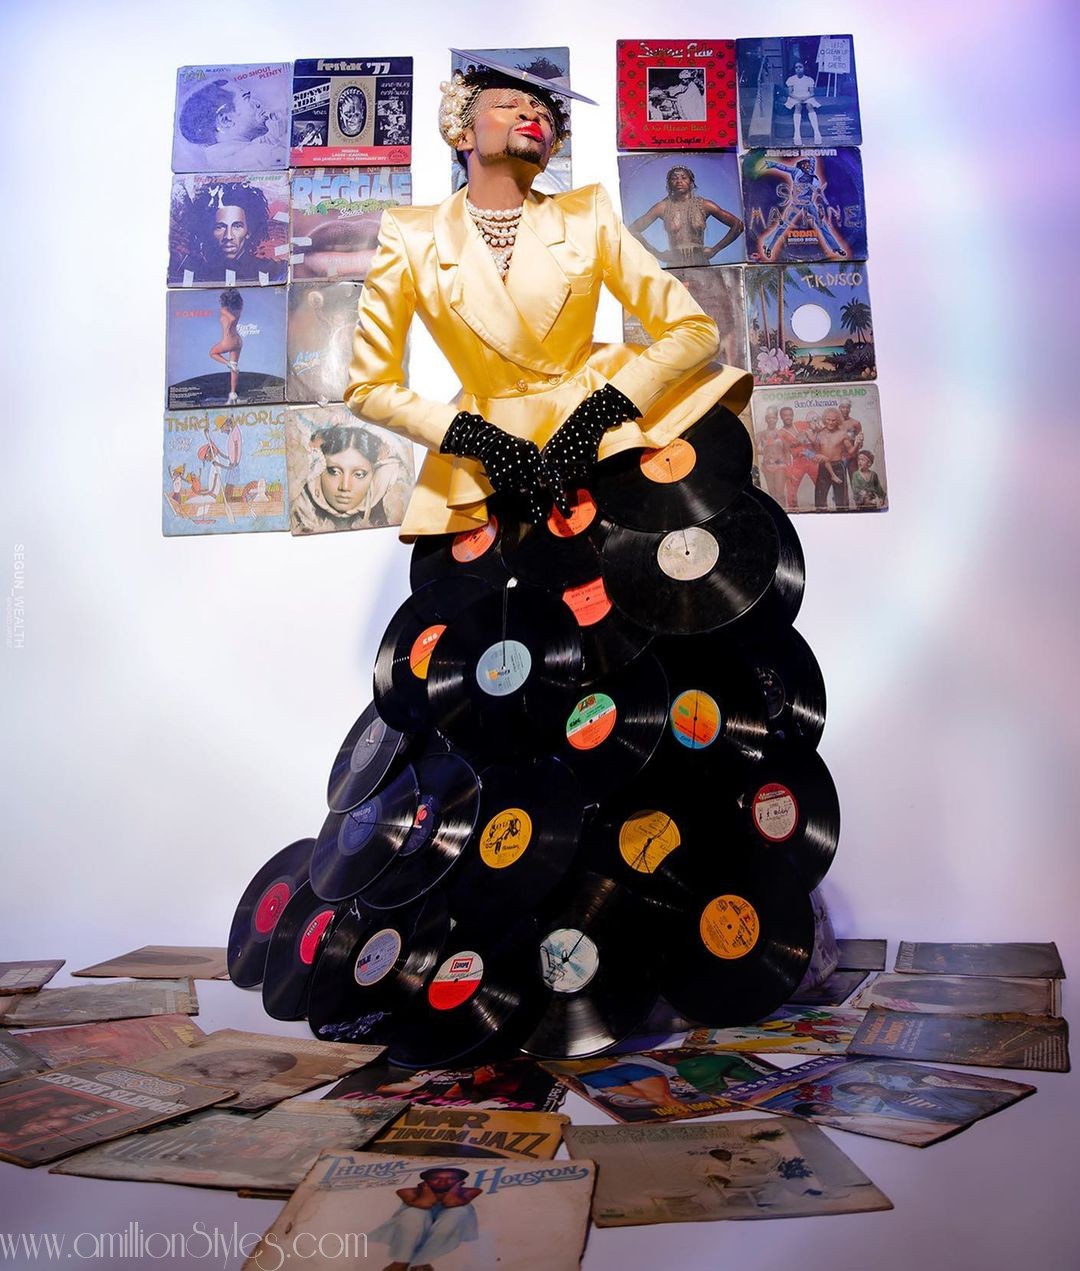 Denrele Celebrated 40th Birthday With Beautiful Photoshoot